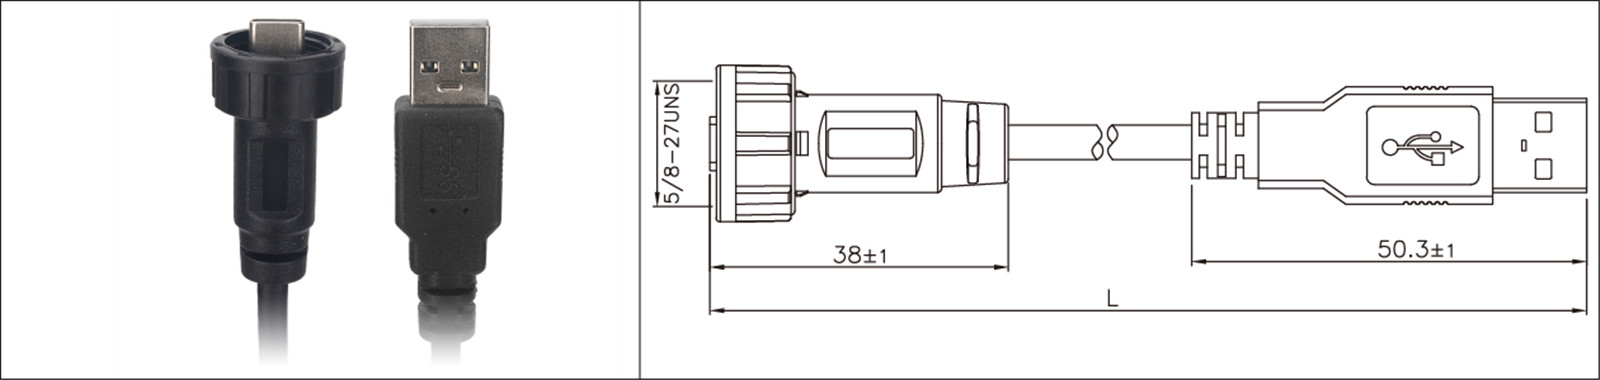 Micro USB tipo de montagem em painel 2.0 3.0 fêmea e macho à prova d'água IP67 cabo de extensão overmold industrial connecto-02 (1)